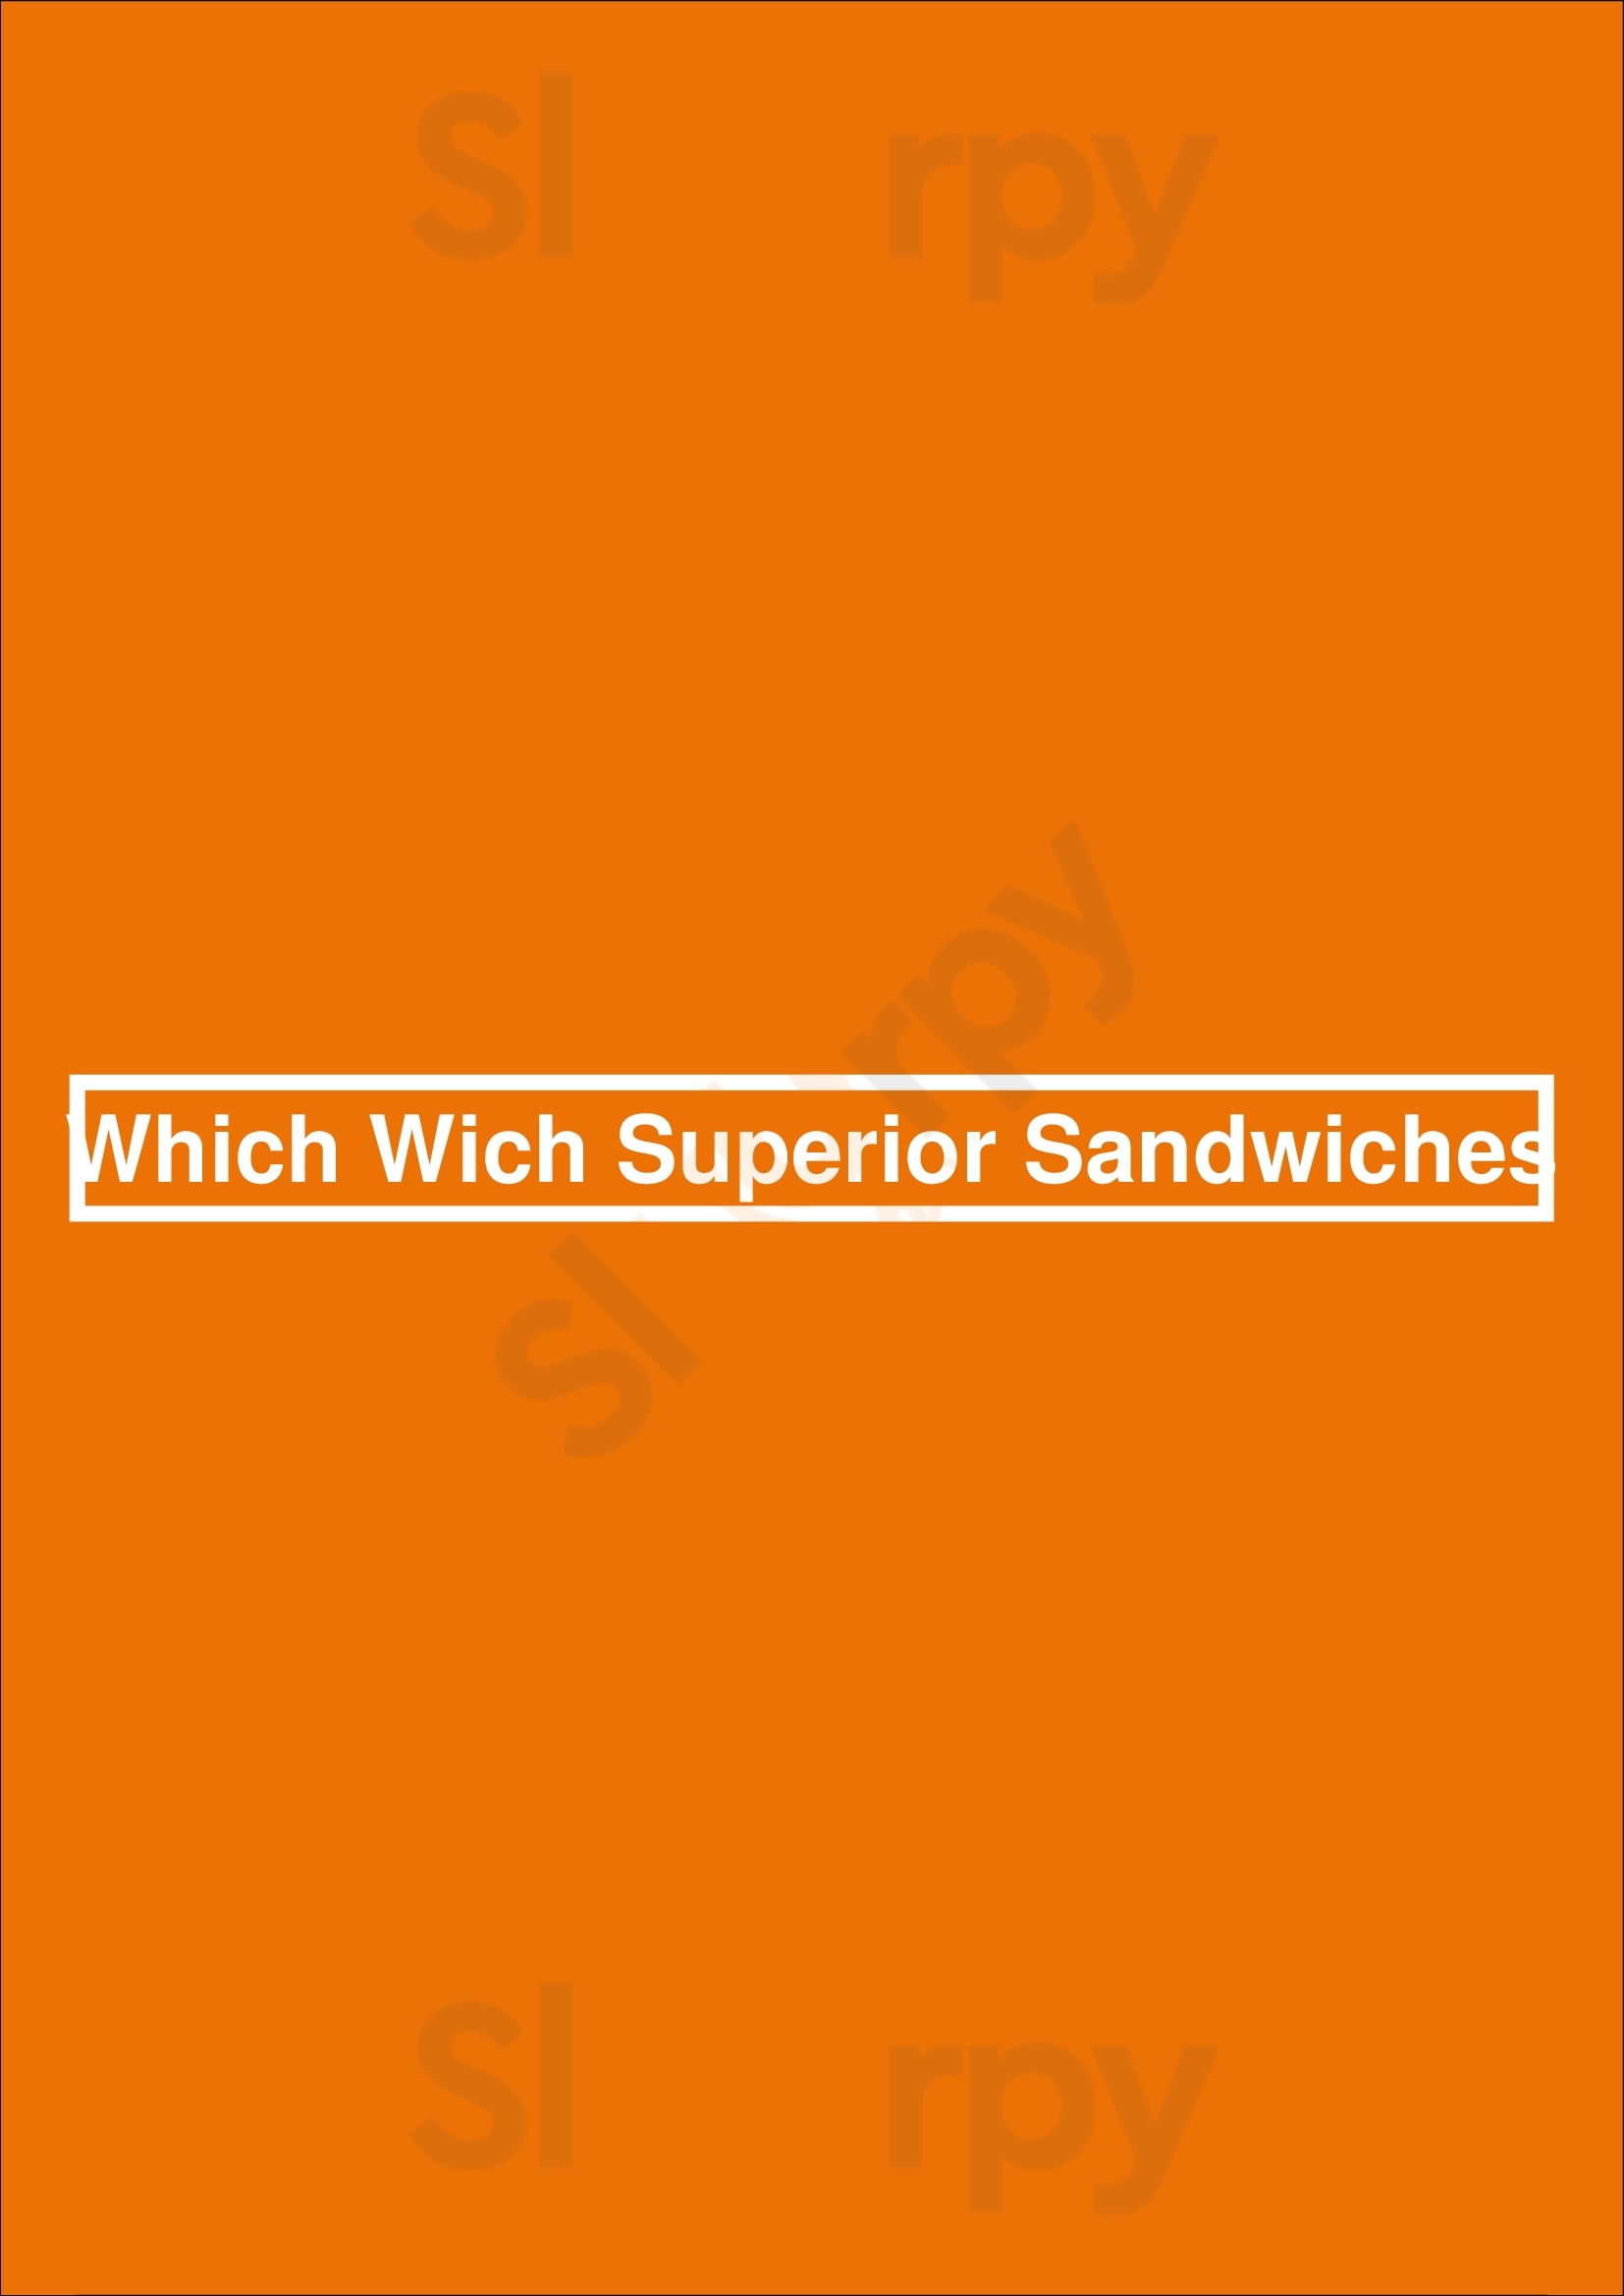 Which Wich Superior Sandwiches Chesterfield Menu - 1